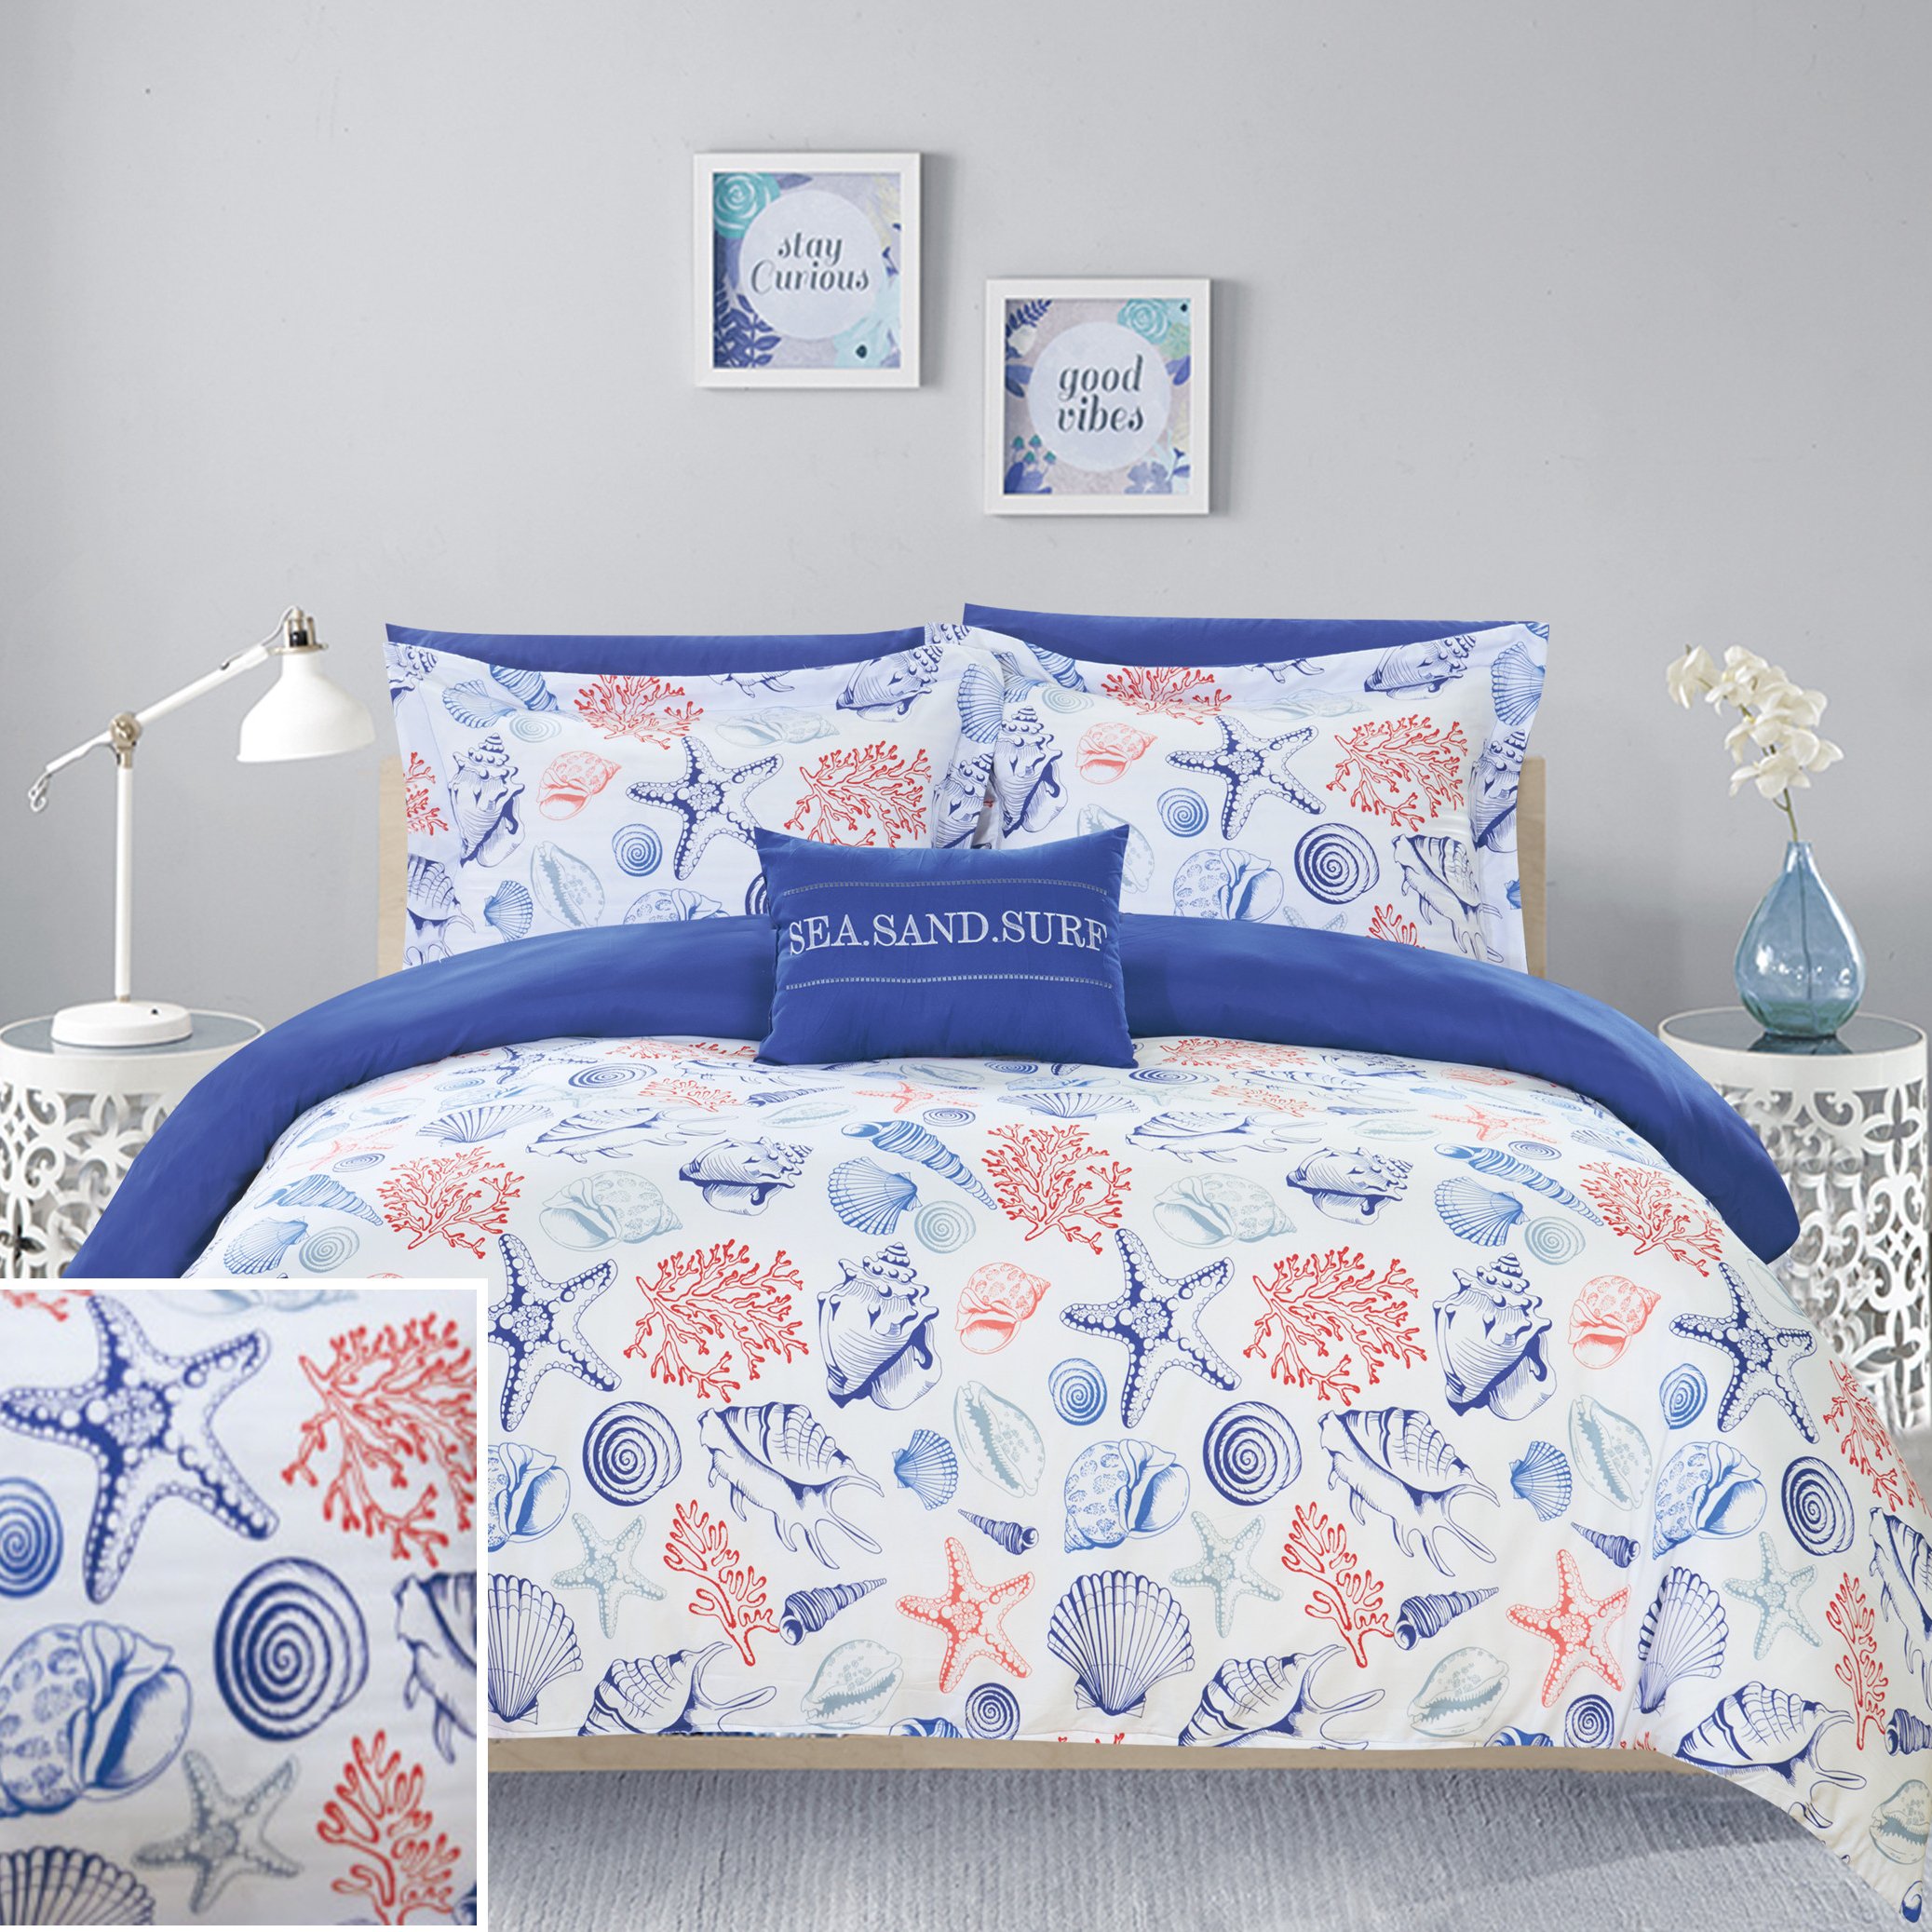 8 Or 6 Piece Reversible Comforter Set Sea, Sand, Surf Theme Print Design Bed In A Bag - Beige, King